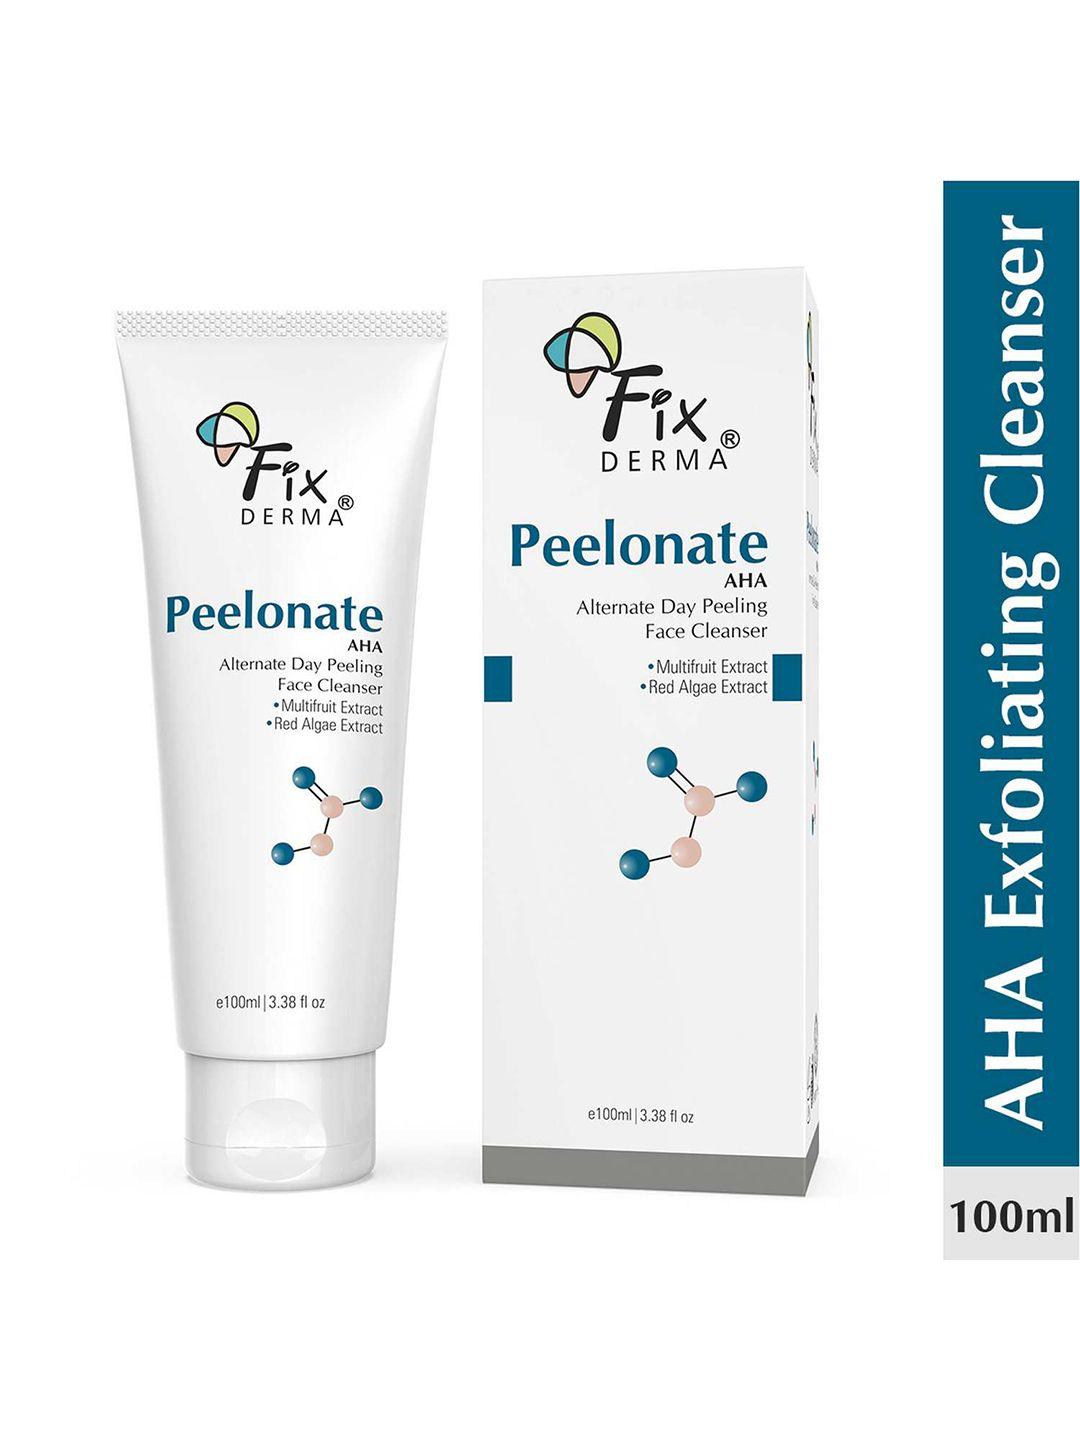 fixderma-peelonate-aha-face-cleanser-&-face-exfoliator--100ml